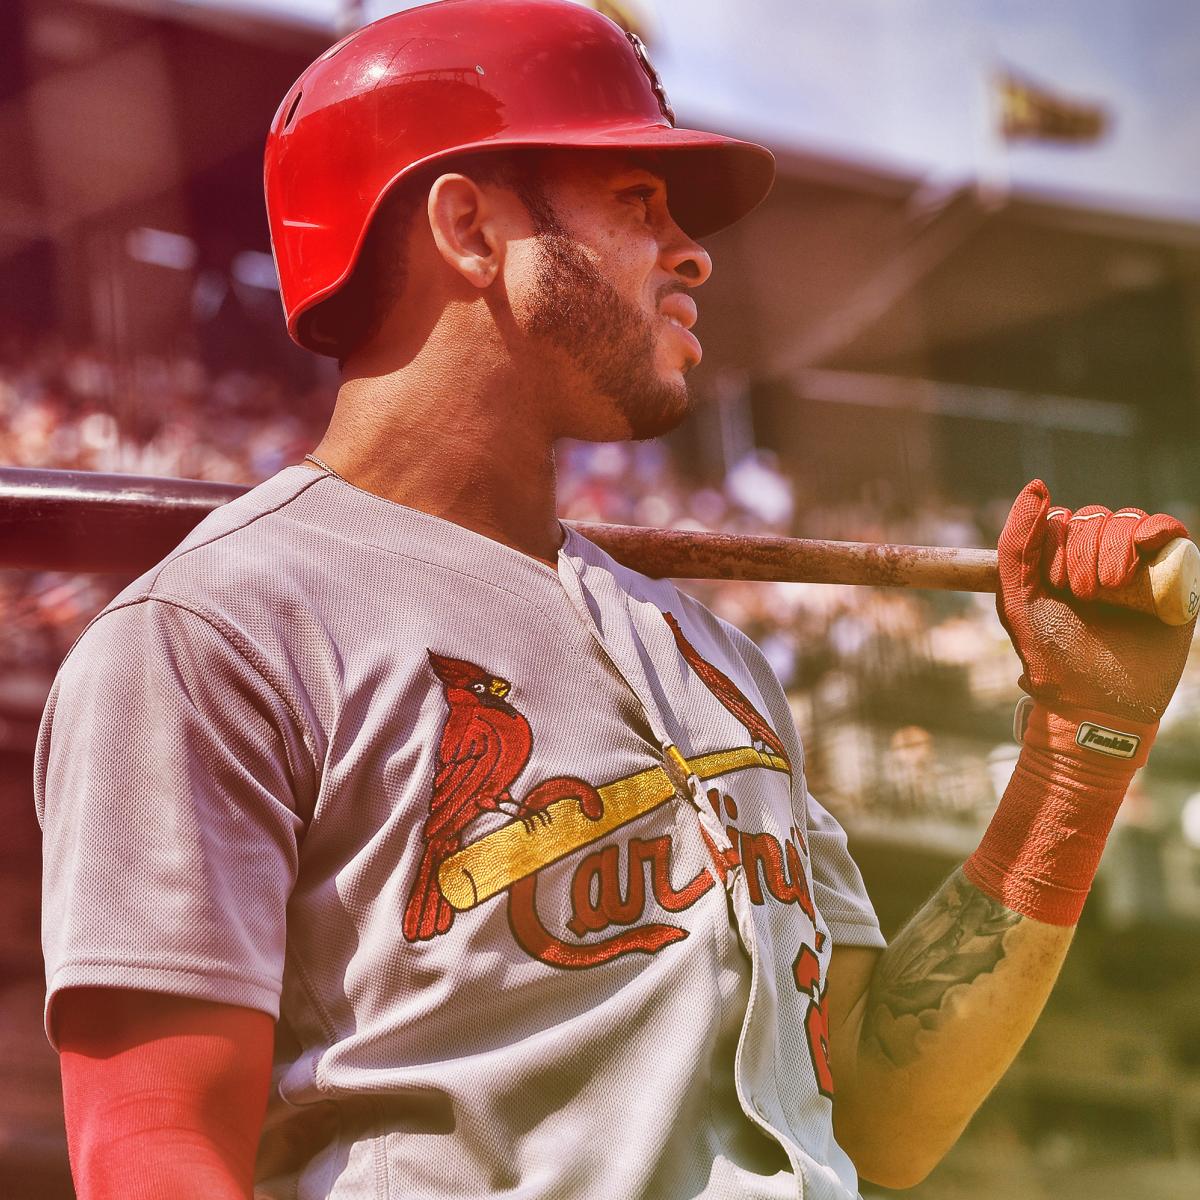 St. Louis Cardinals Team Recliner Protector